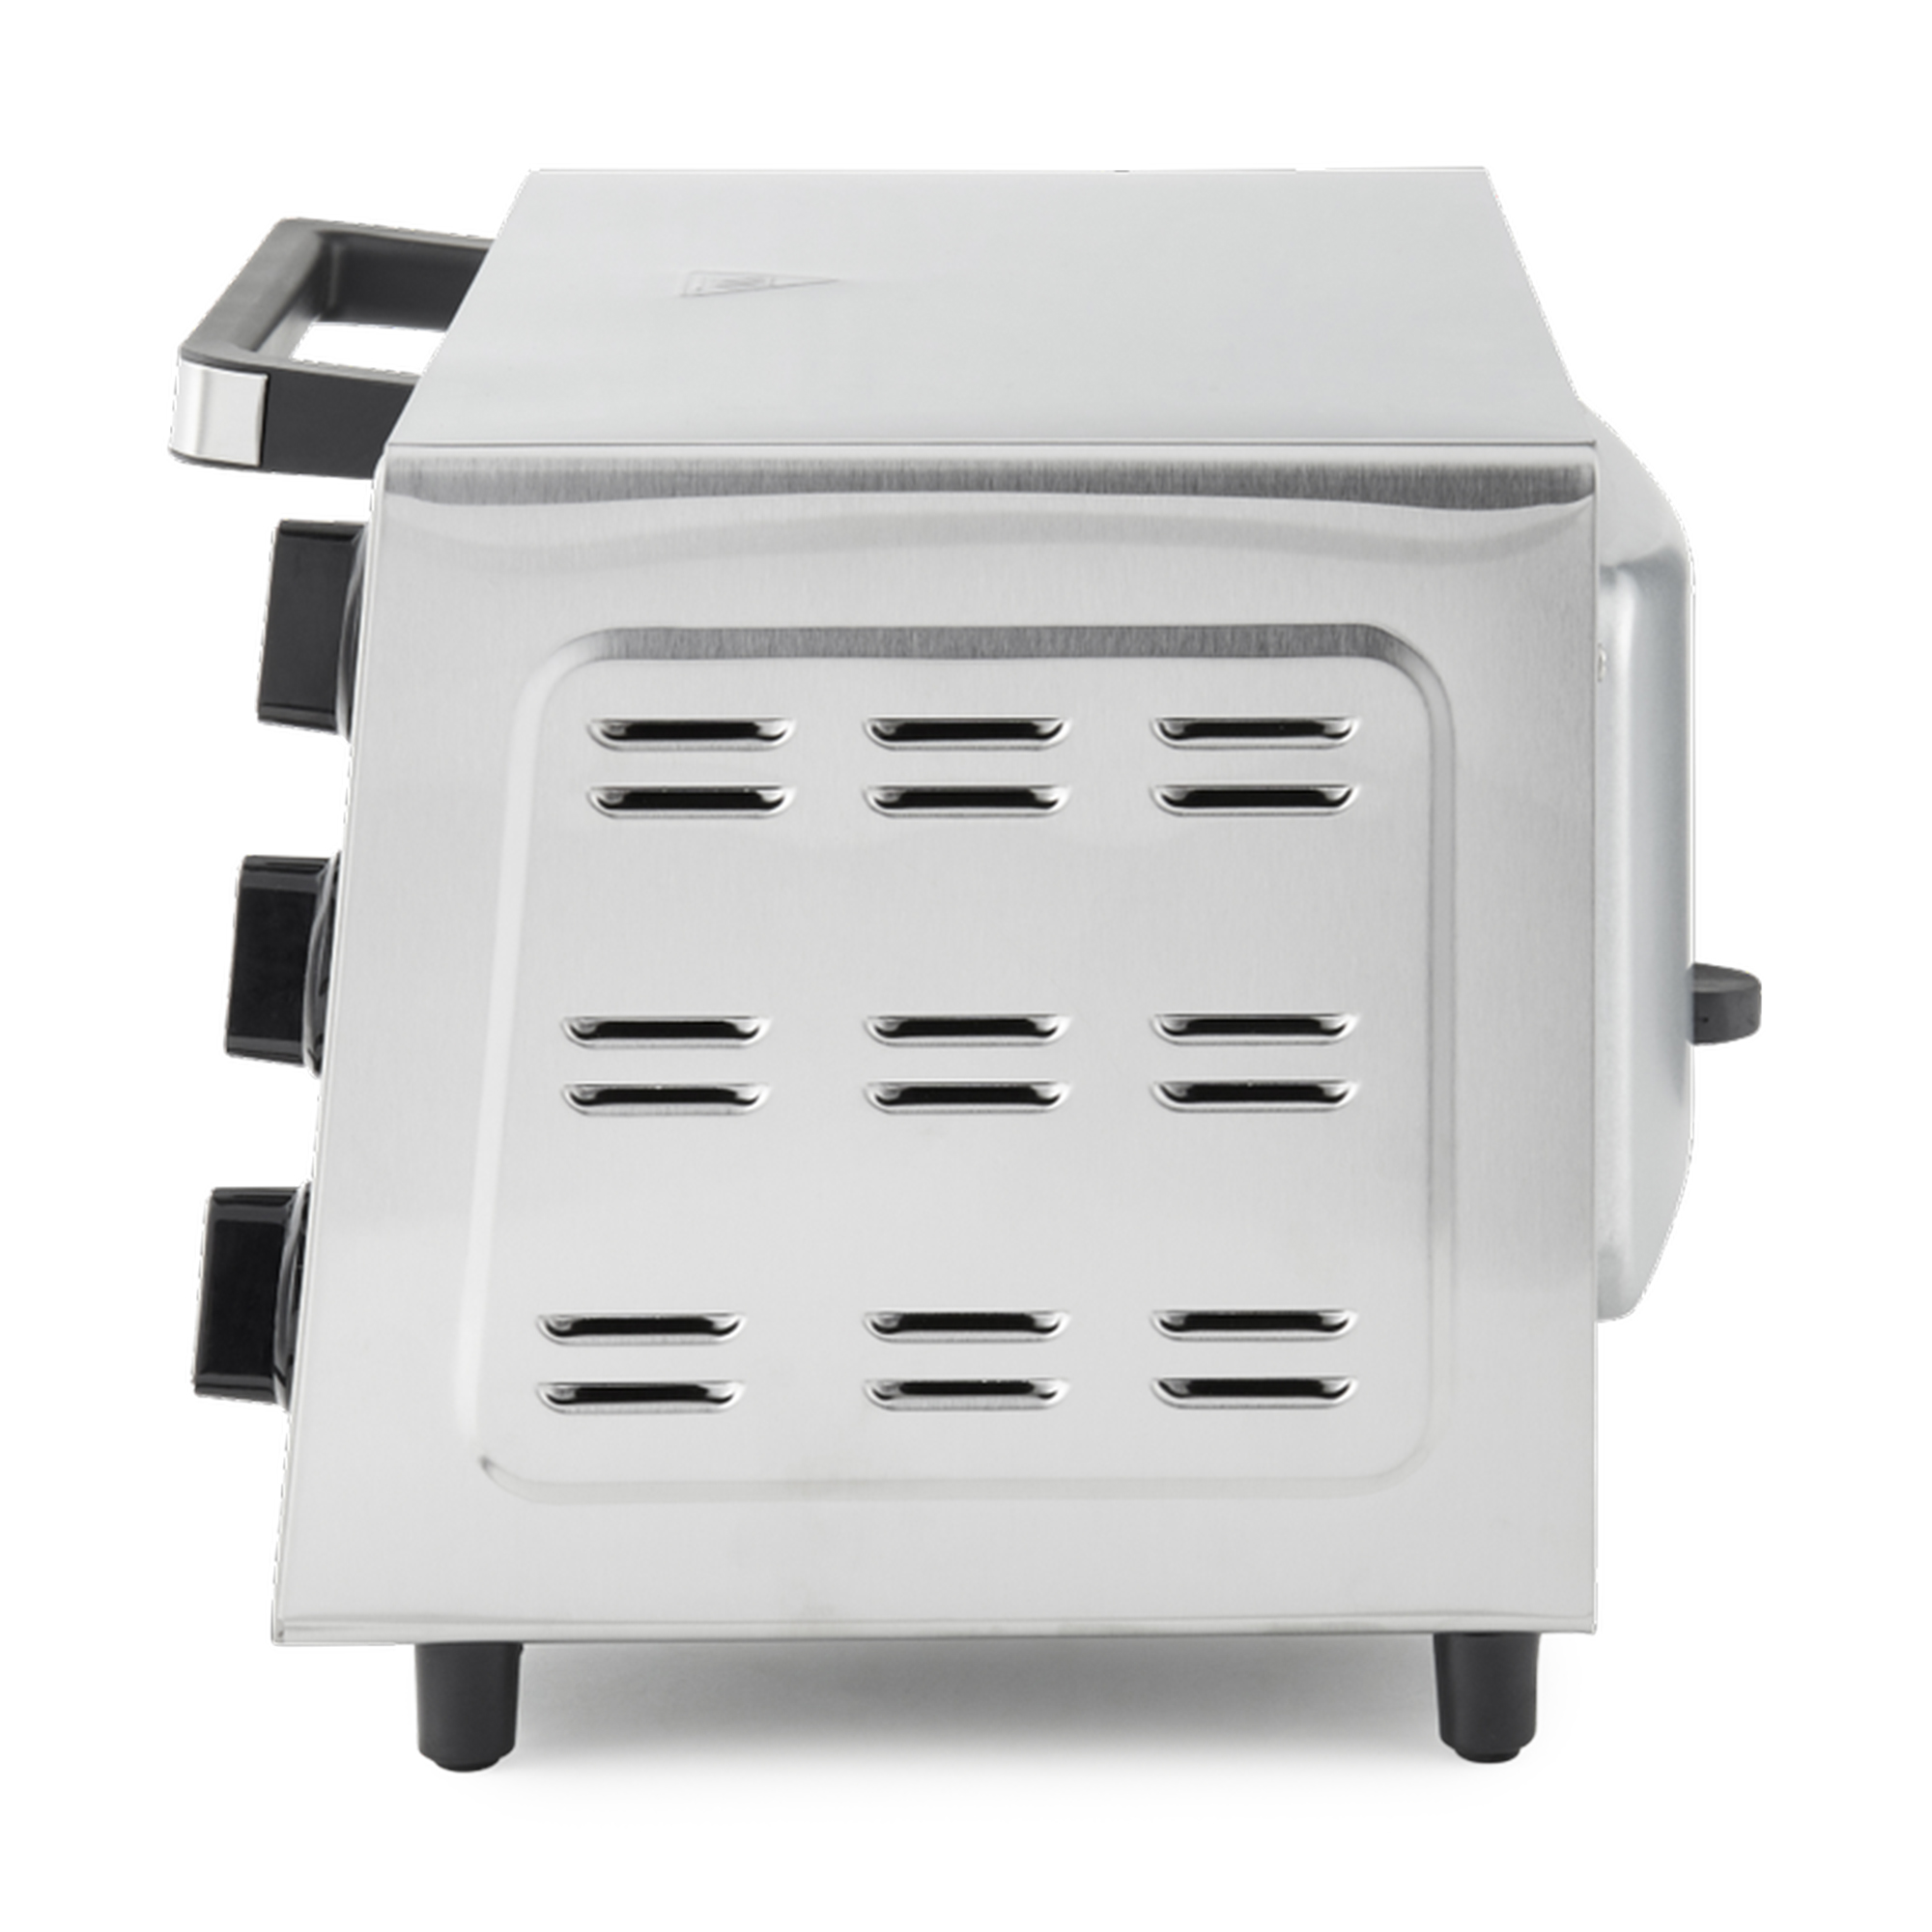 Hamilton Beach Countertop Toaster Oven | Model# 31401 - image 3 of 6